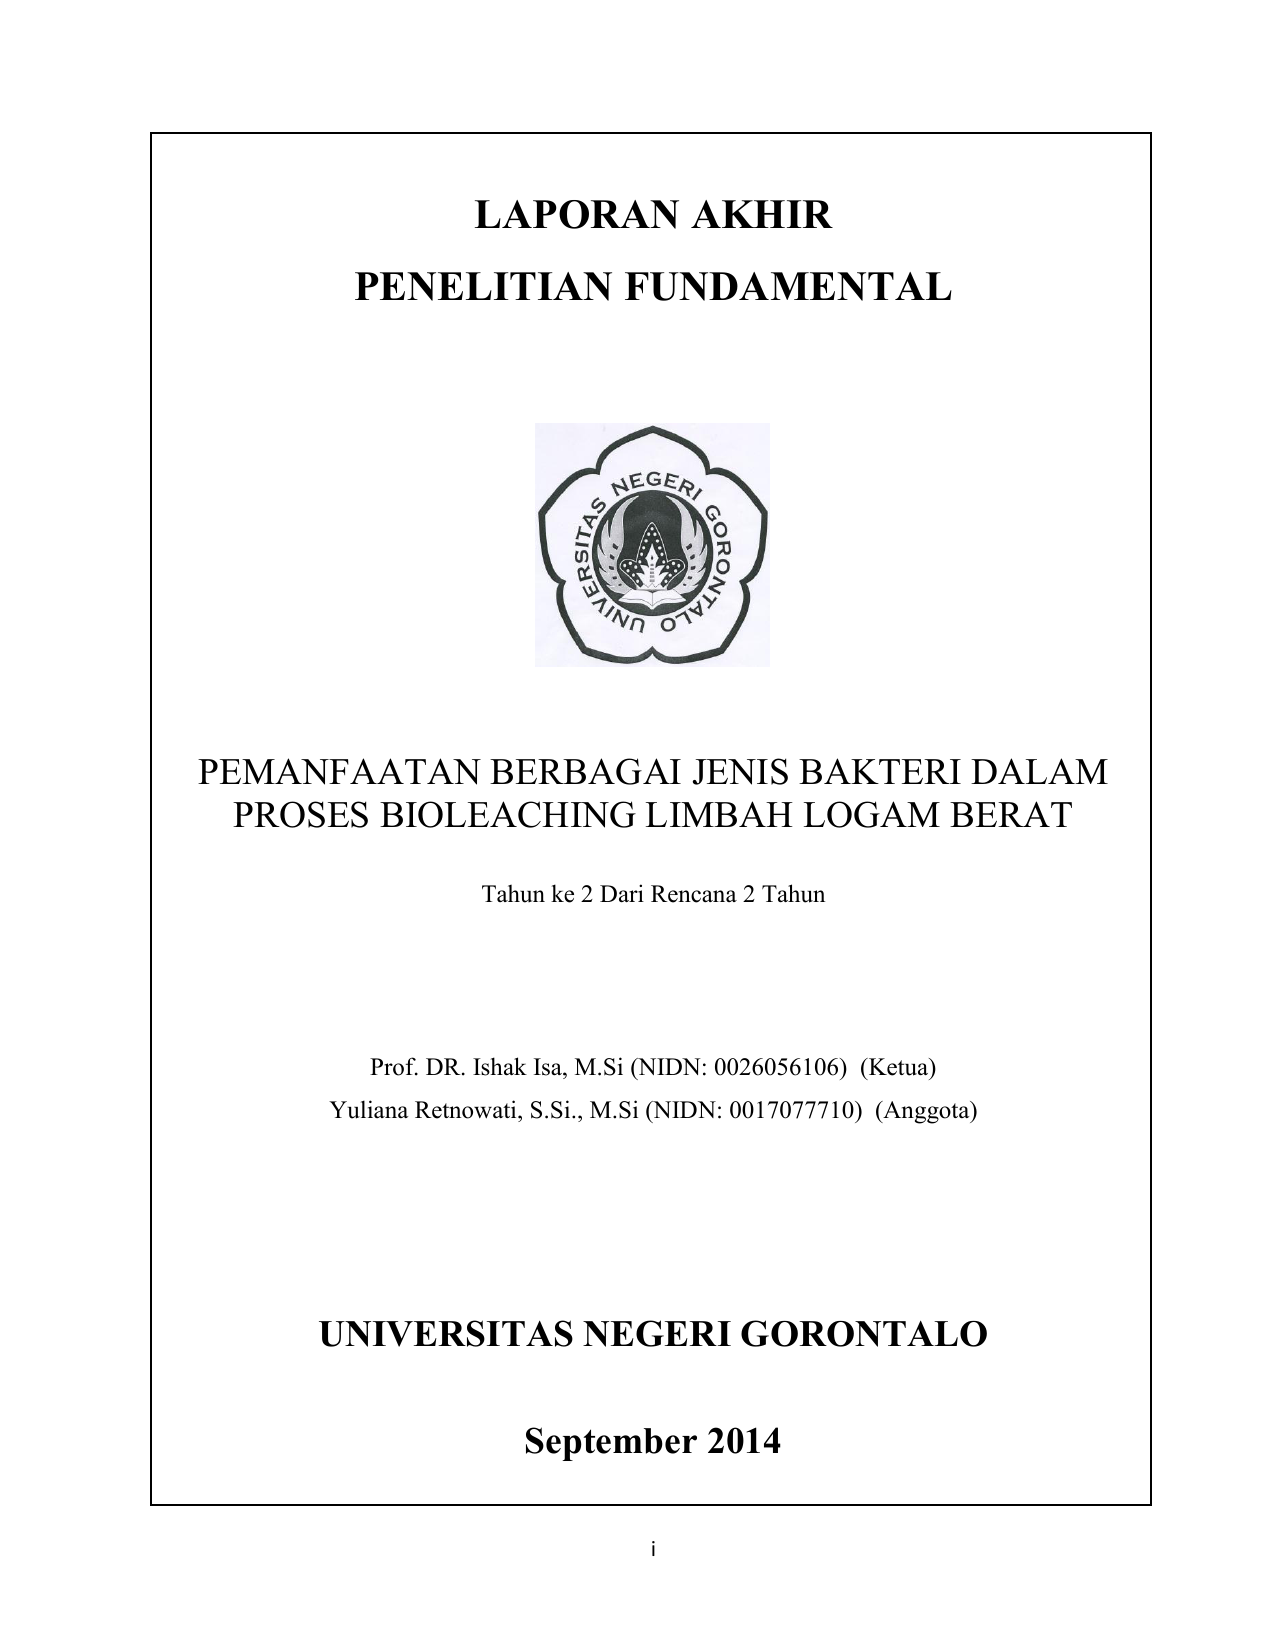 Repository UNG Universitas Negeri Gorontalo